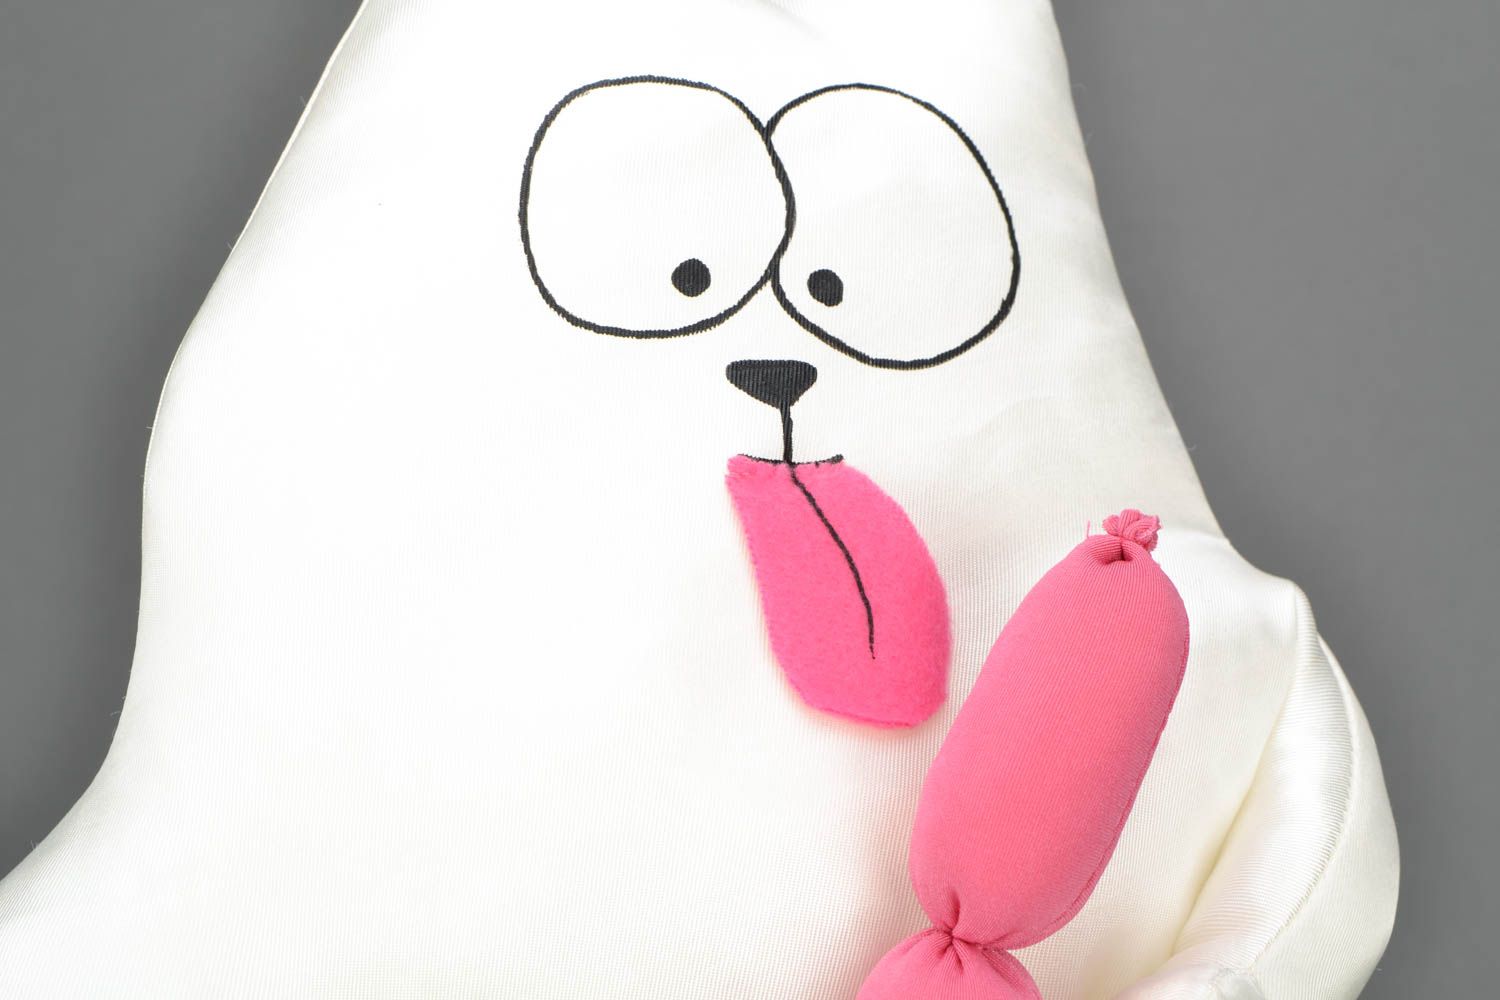 Интерьерная игрушка подушка в виде кота с сосисками фото 3